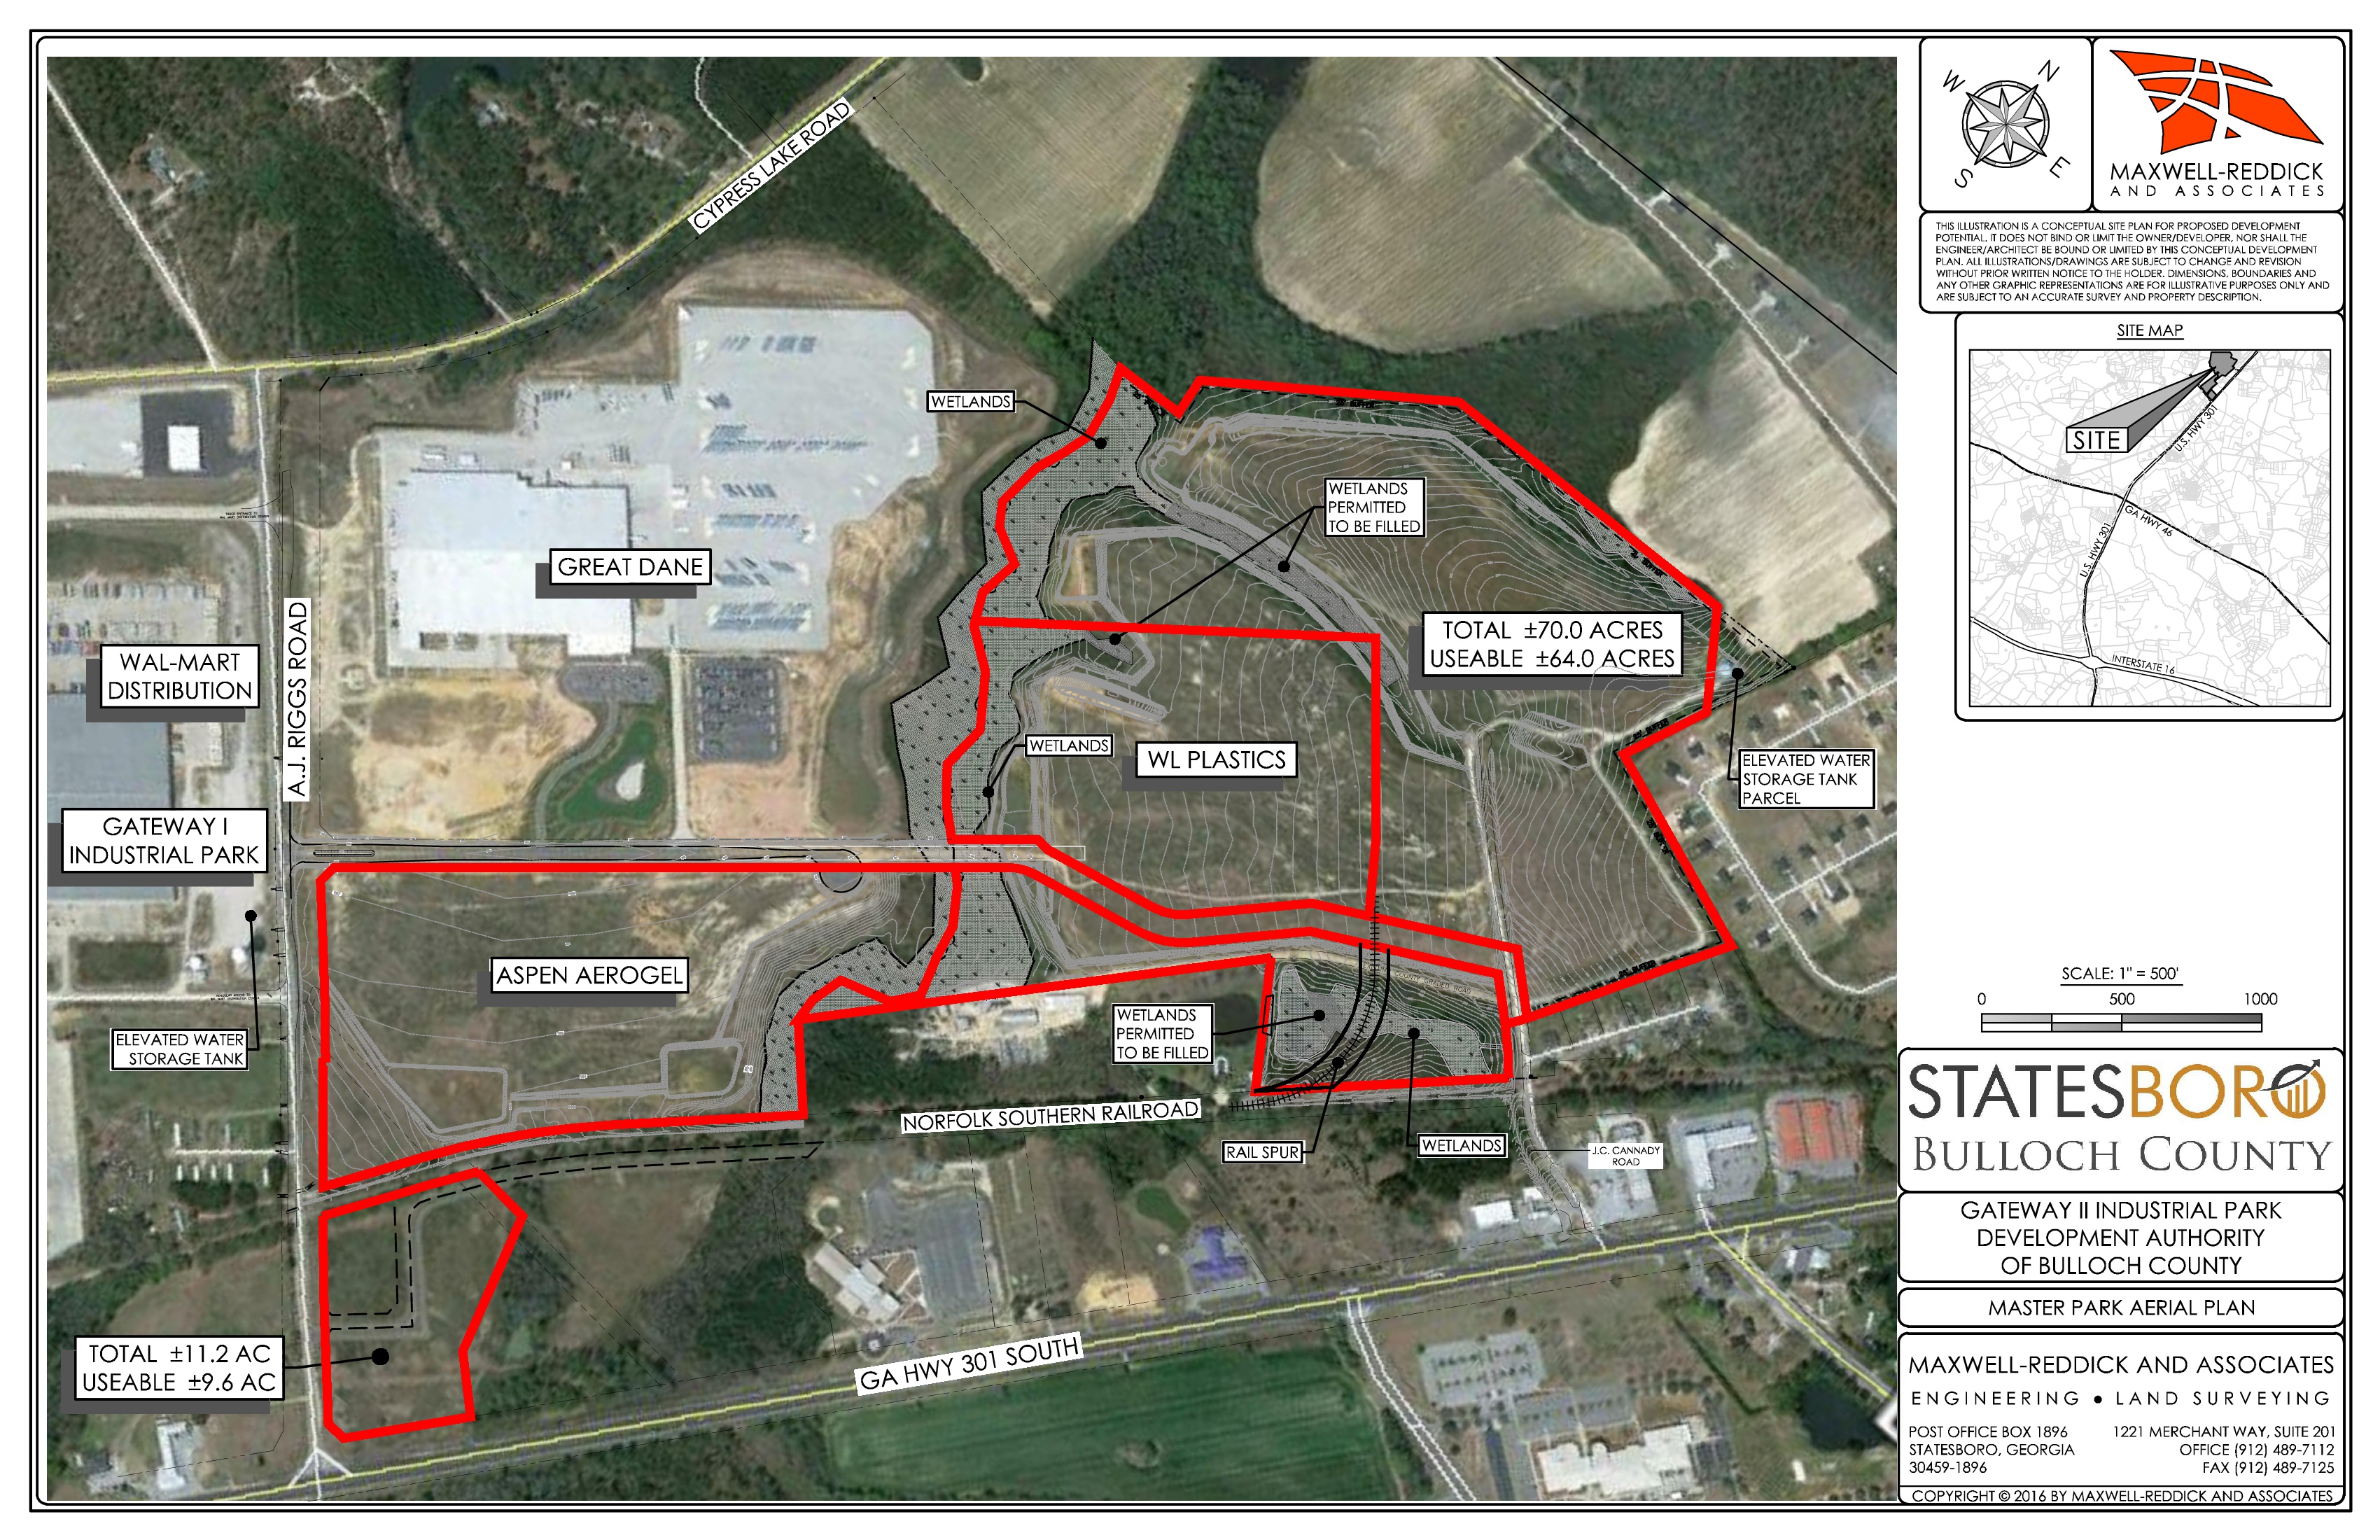 Gateway Industrial Park II master plan